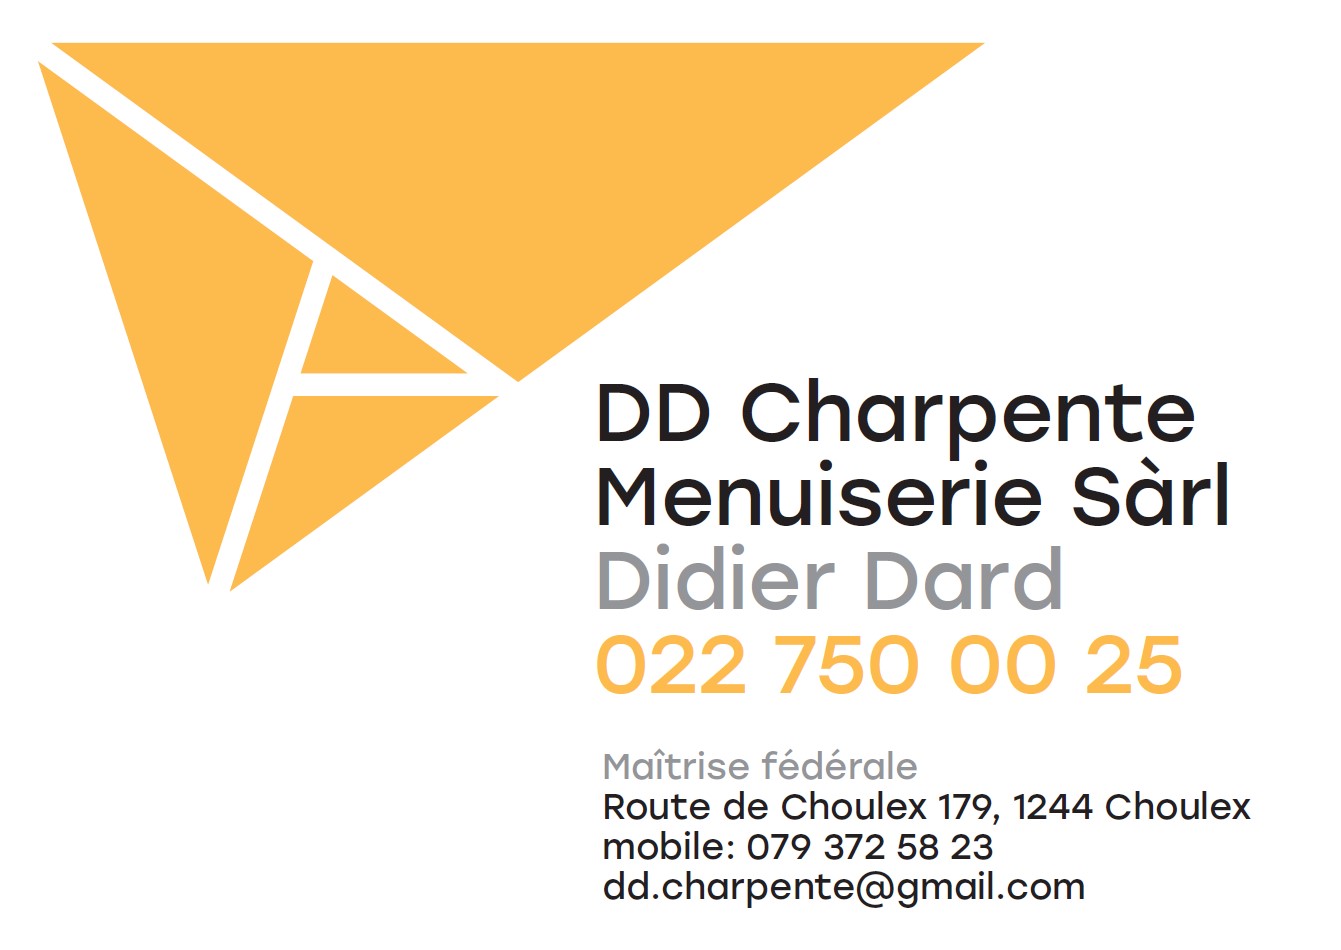 Didier Dard Charpente Menuiserie Sarl